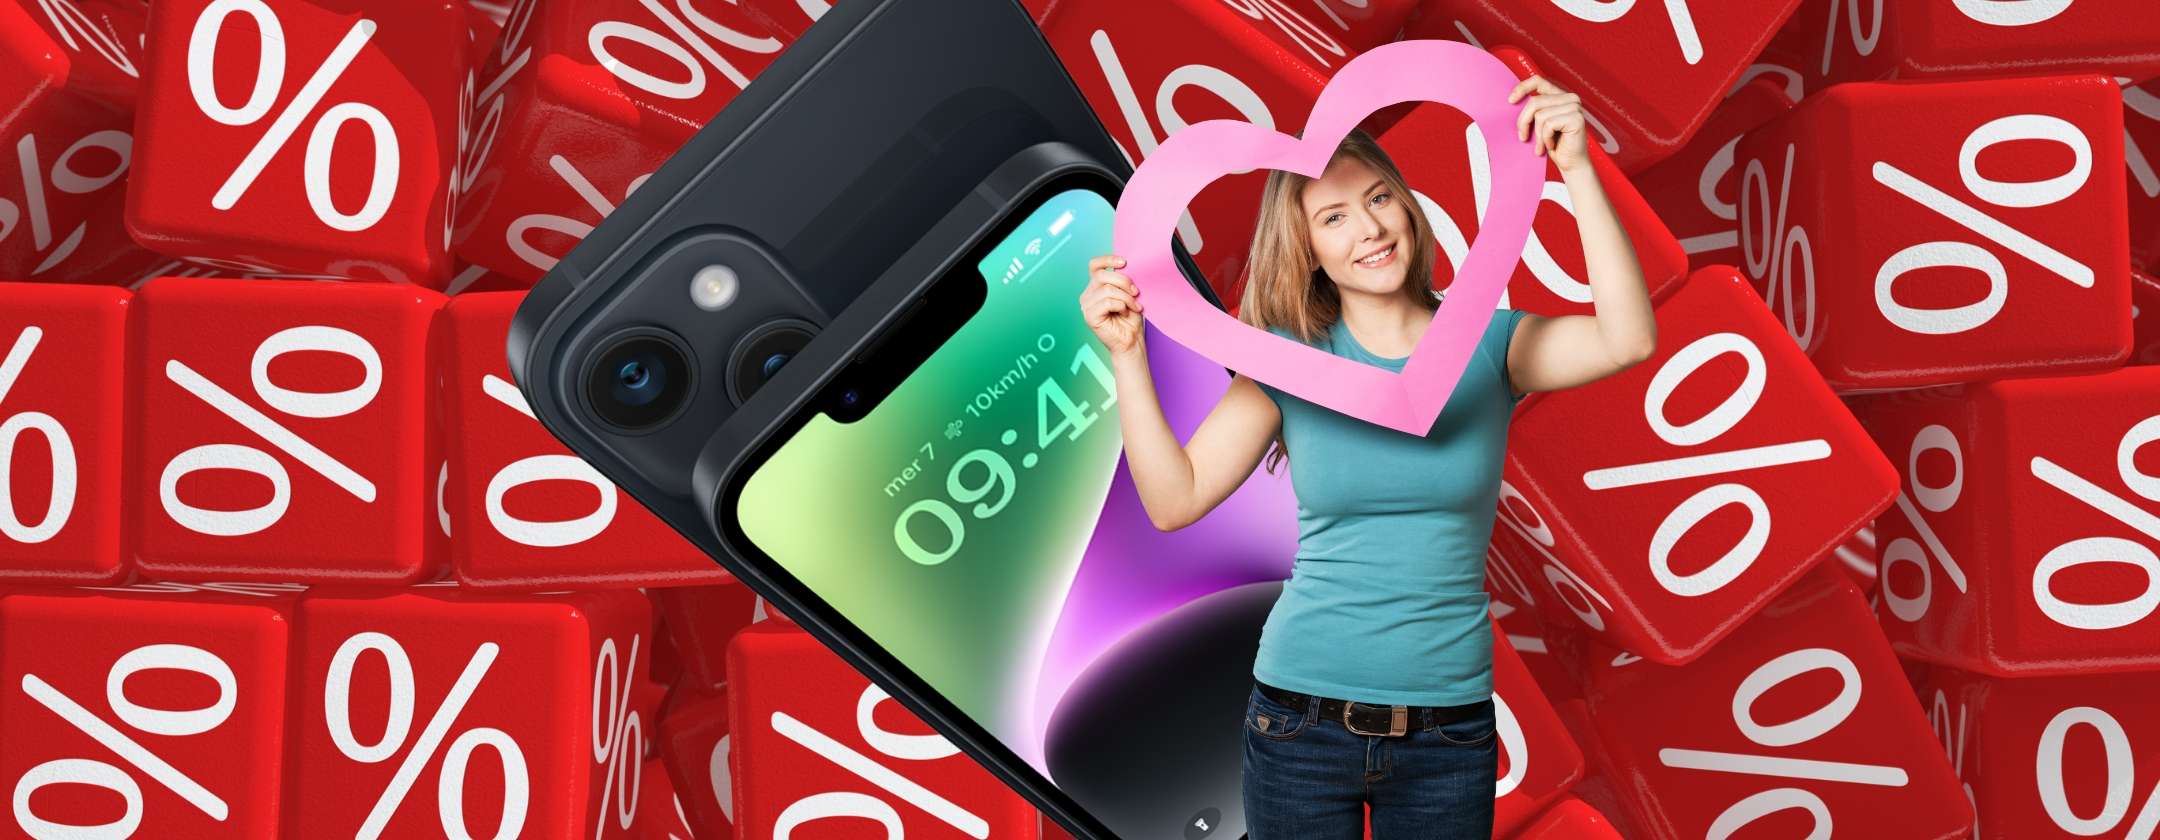 iphone-14-offerta-speciale-amazon